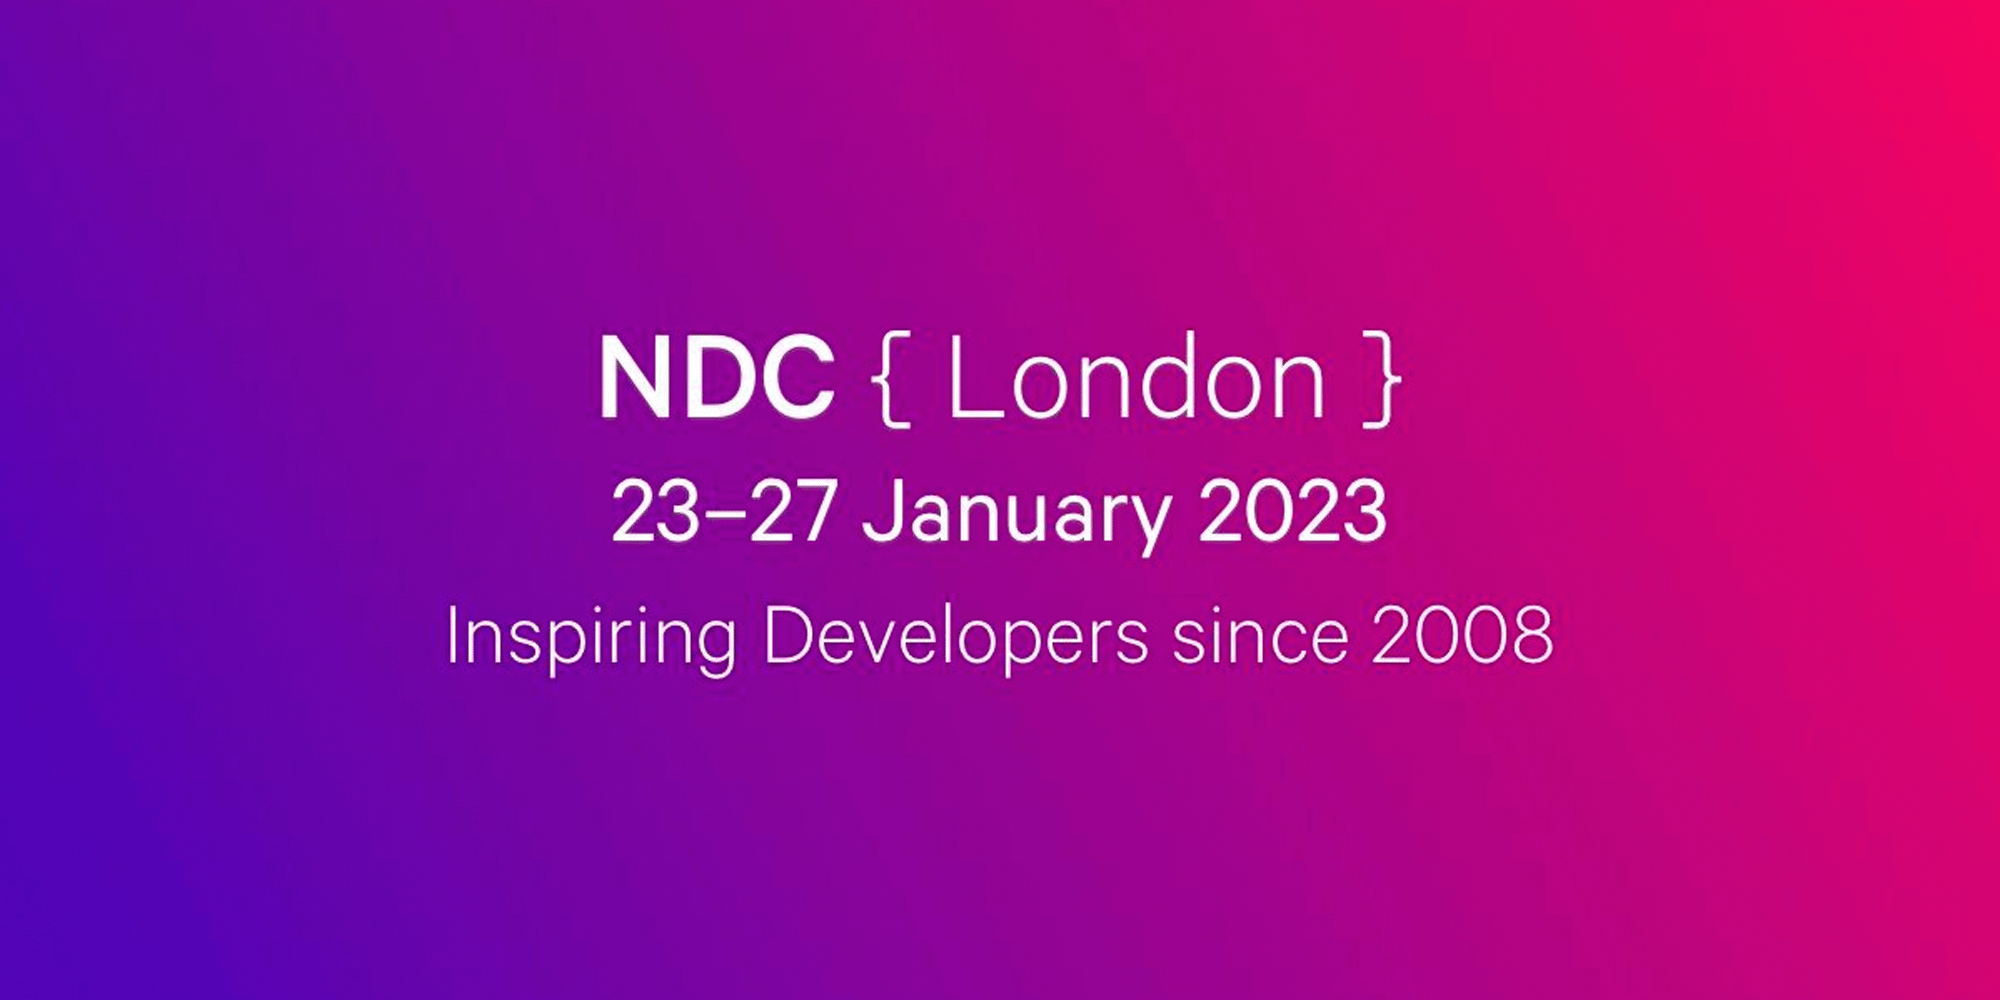 NDC London 2023